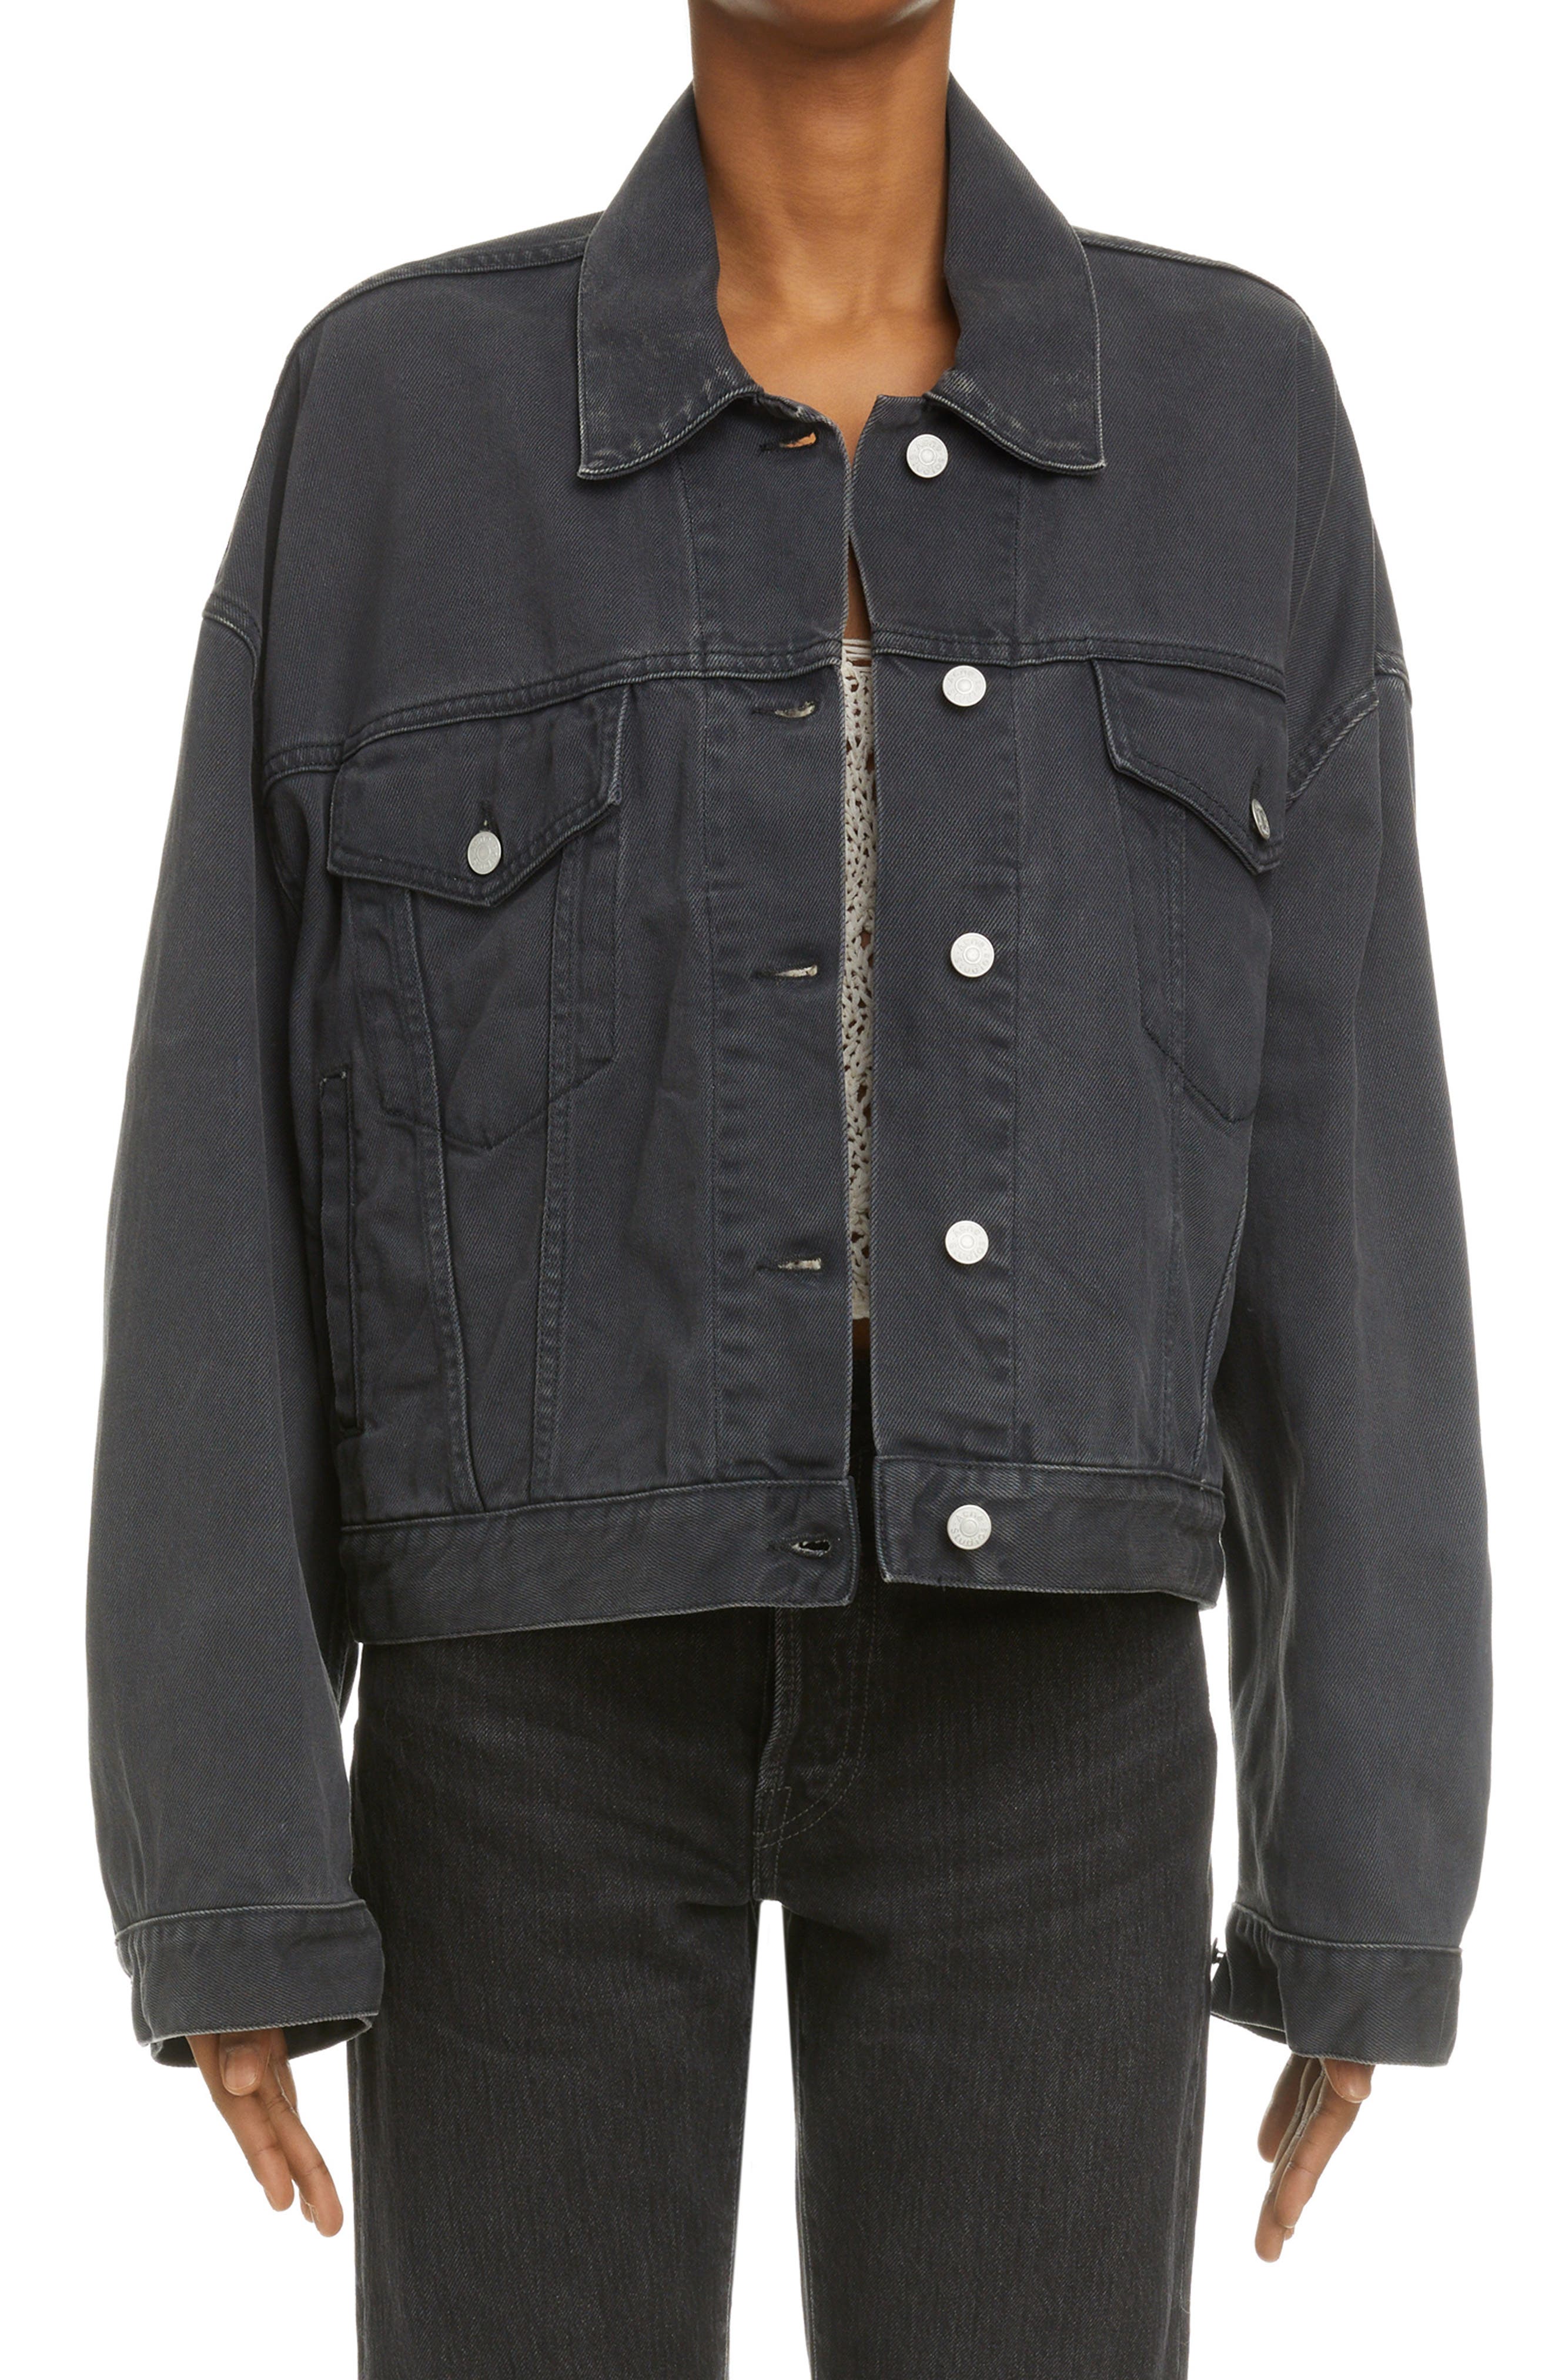 Acne Studios Morris Crop Denim Jacket in Dark Grey at Nordstrom, Size 2 Us